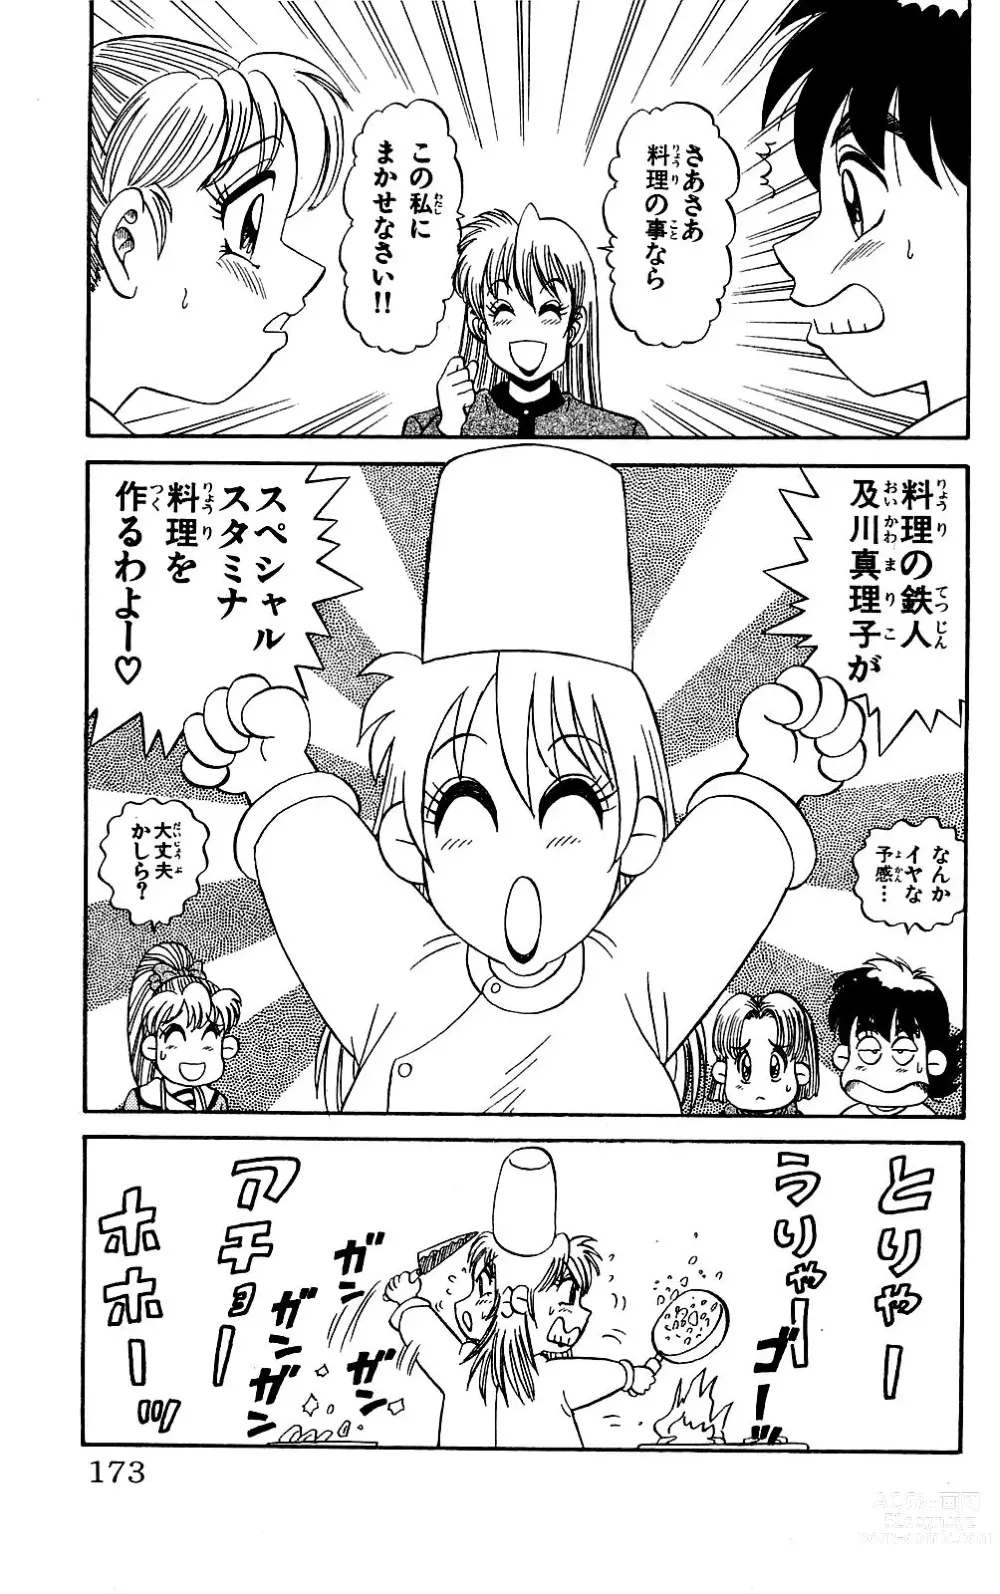 Page 171 of manga Orette Piyoritan Vol. 2